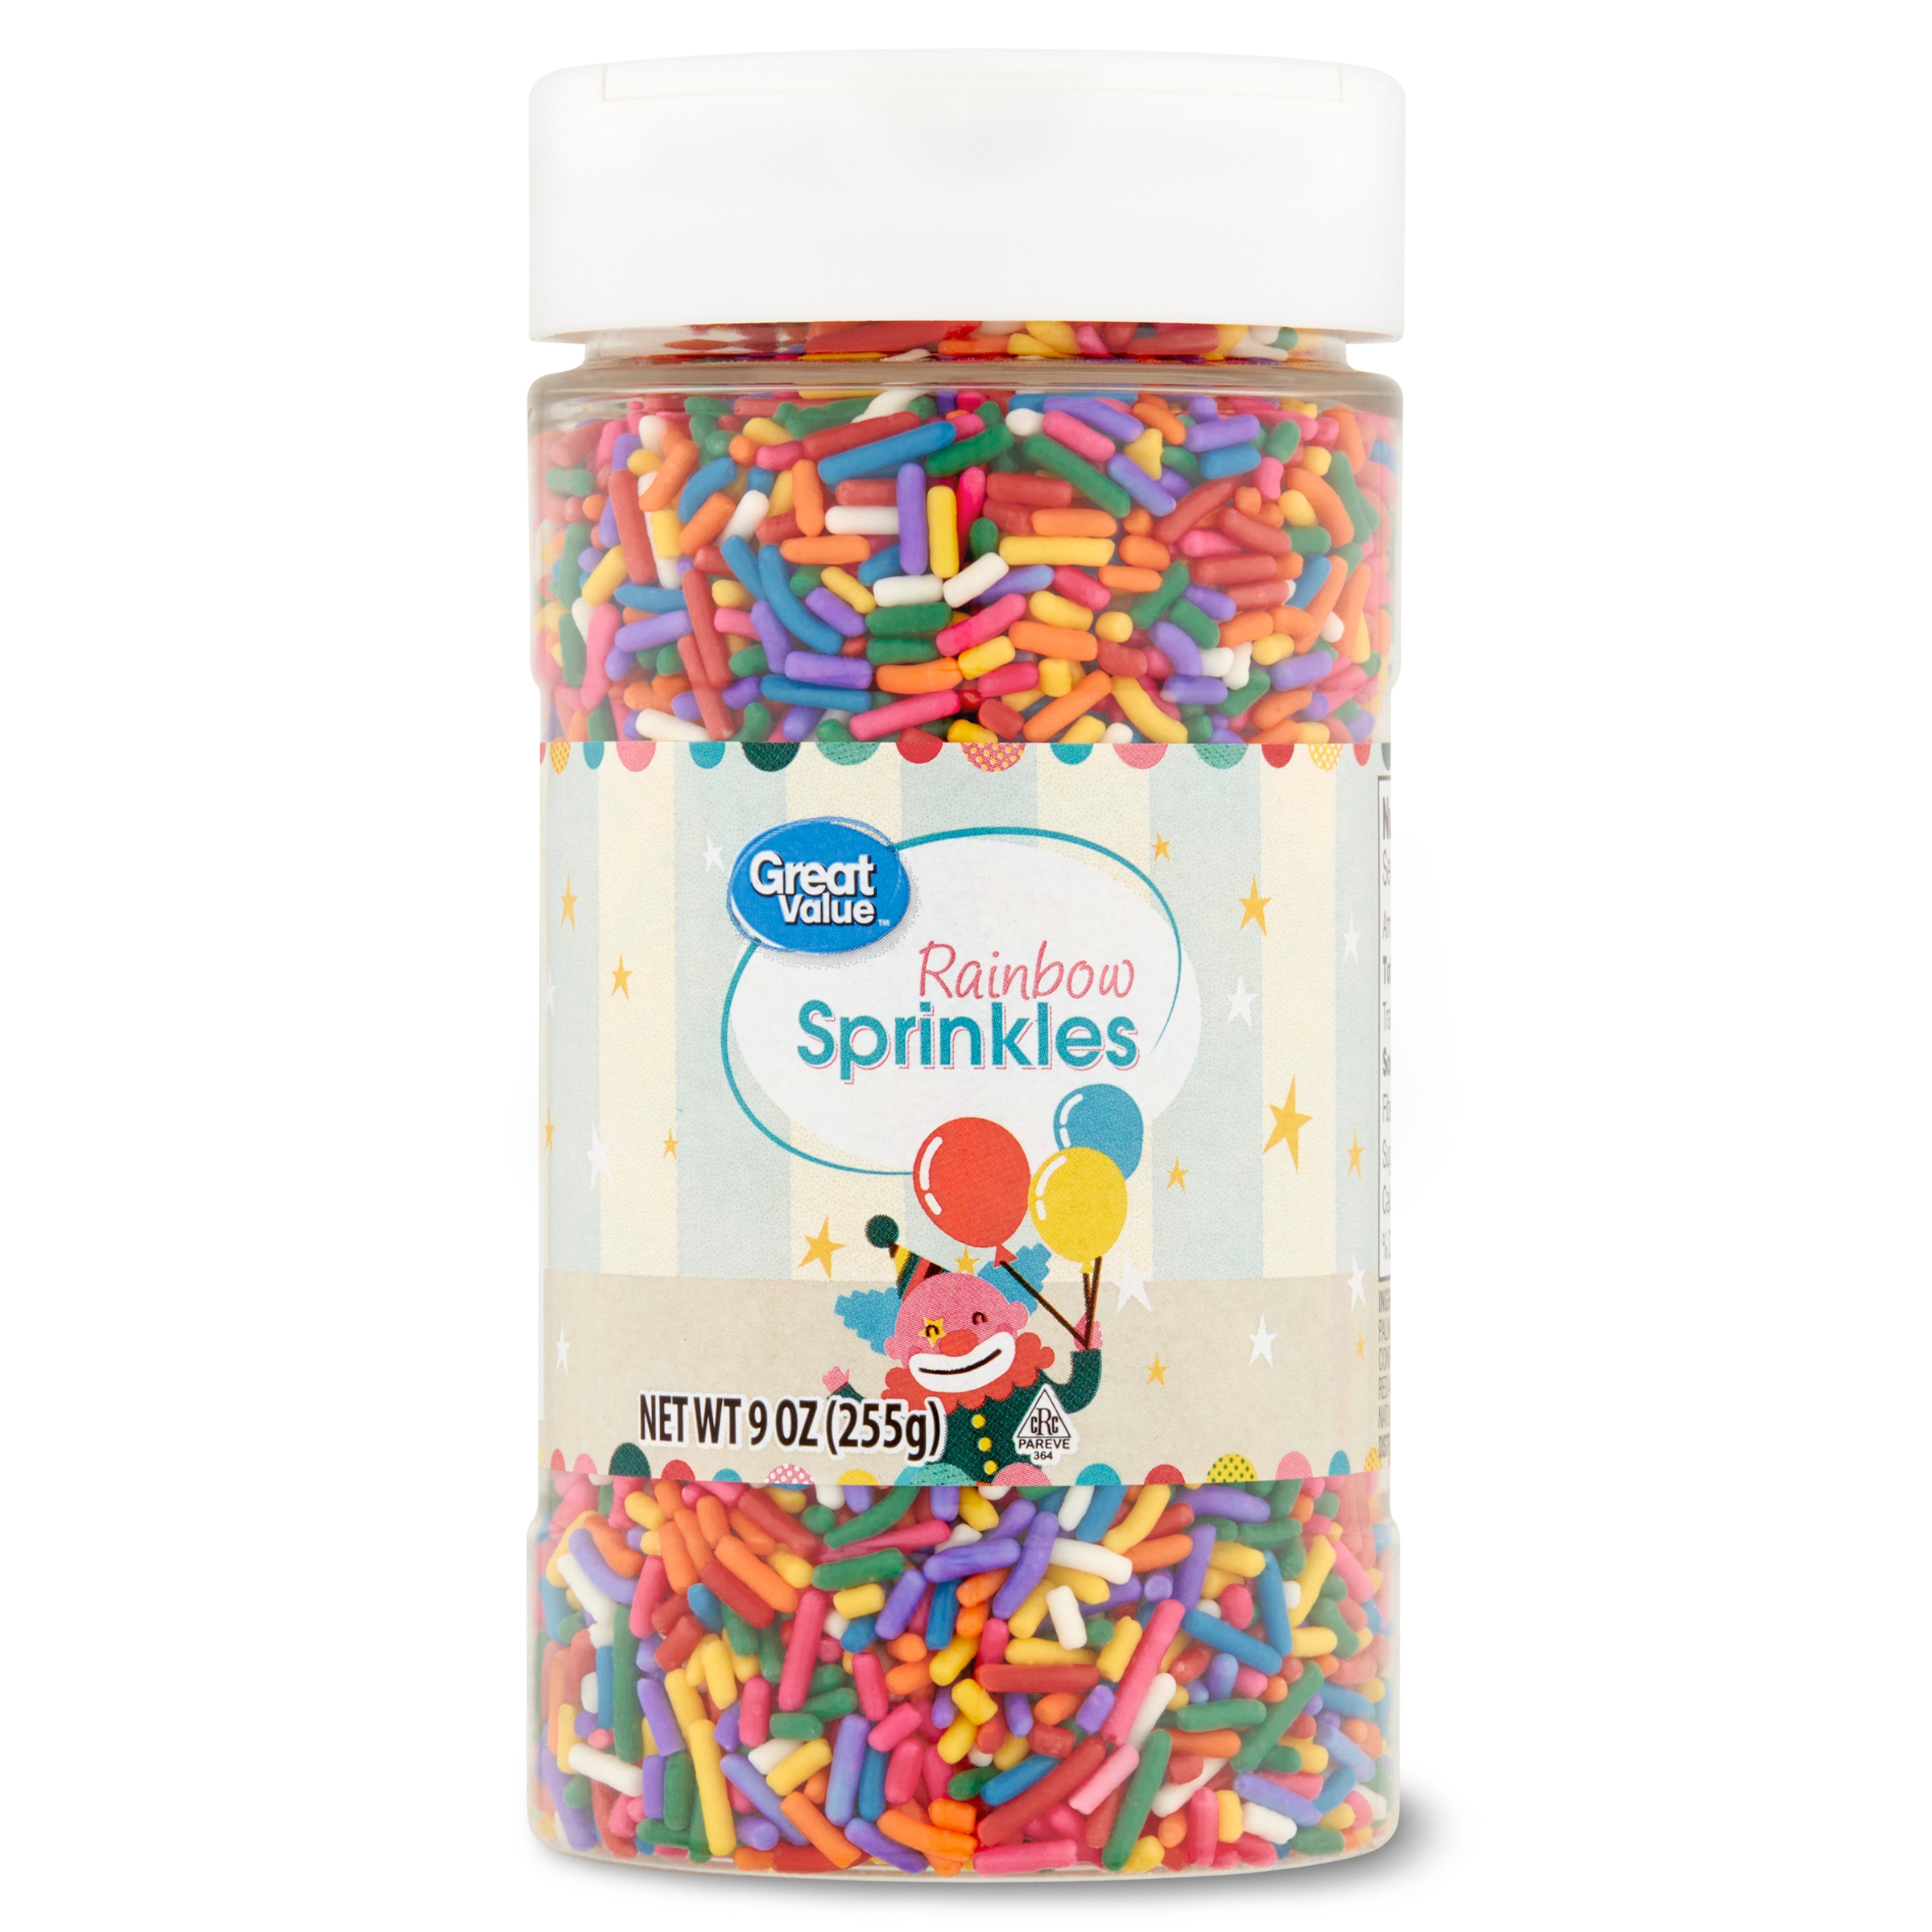 Great Value Rainbow Sprinkles, 9 oz - image 1 of 8